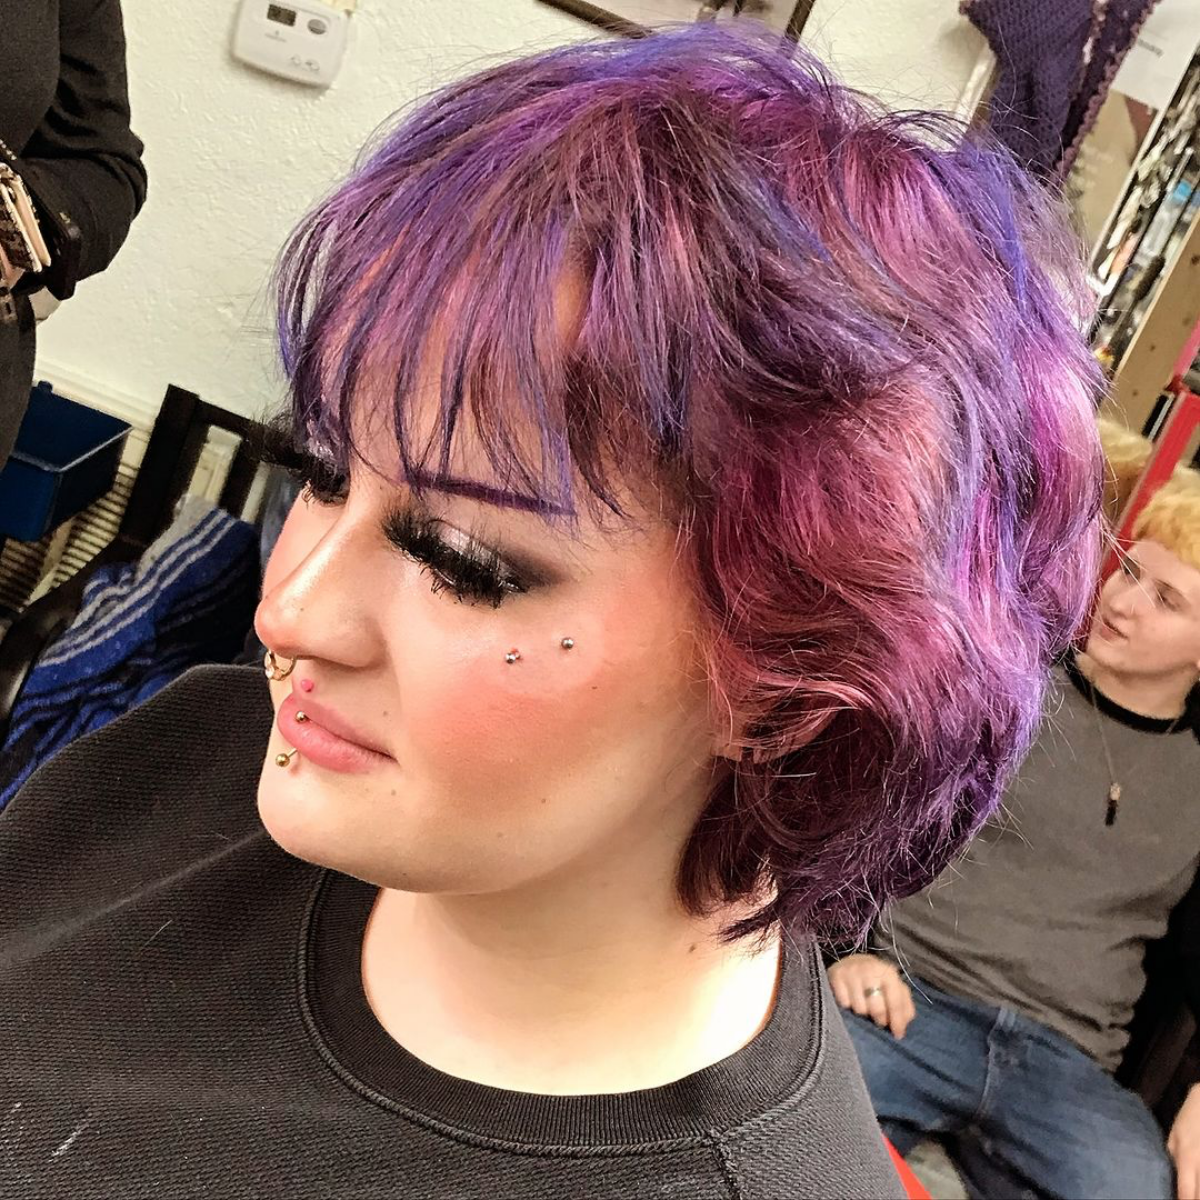 6 girl with purple hair and anti eyebrow piercing